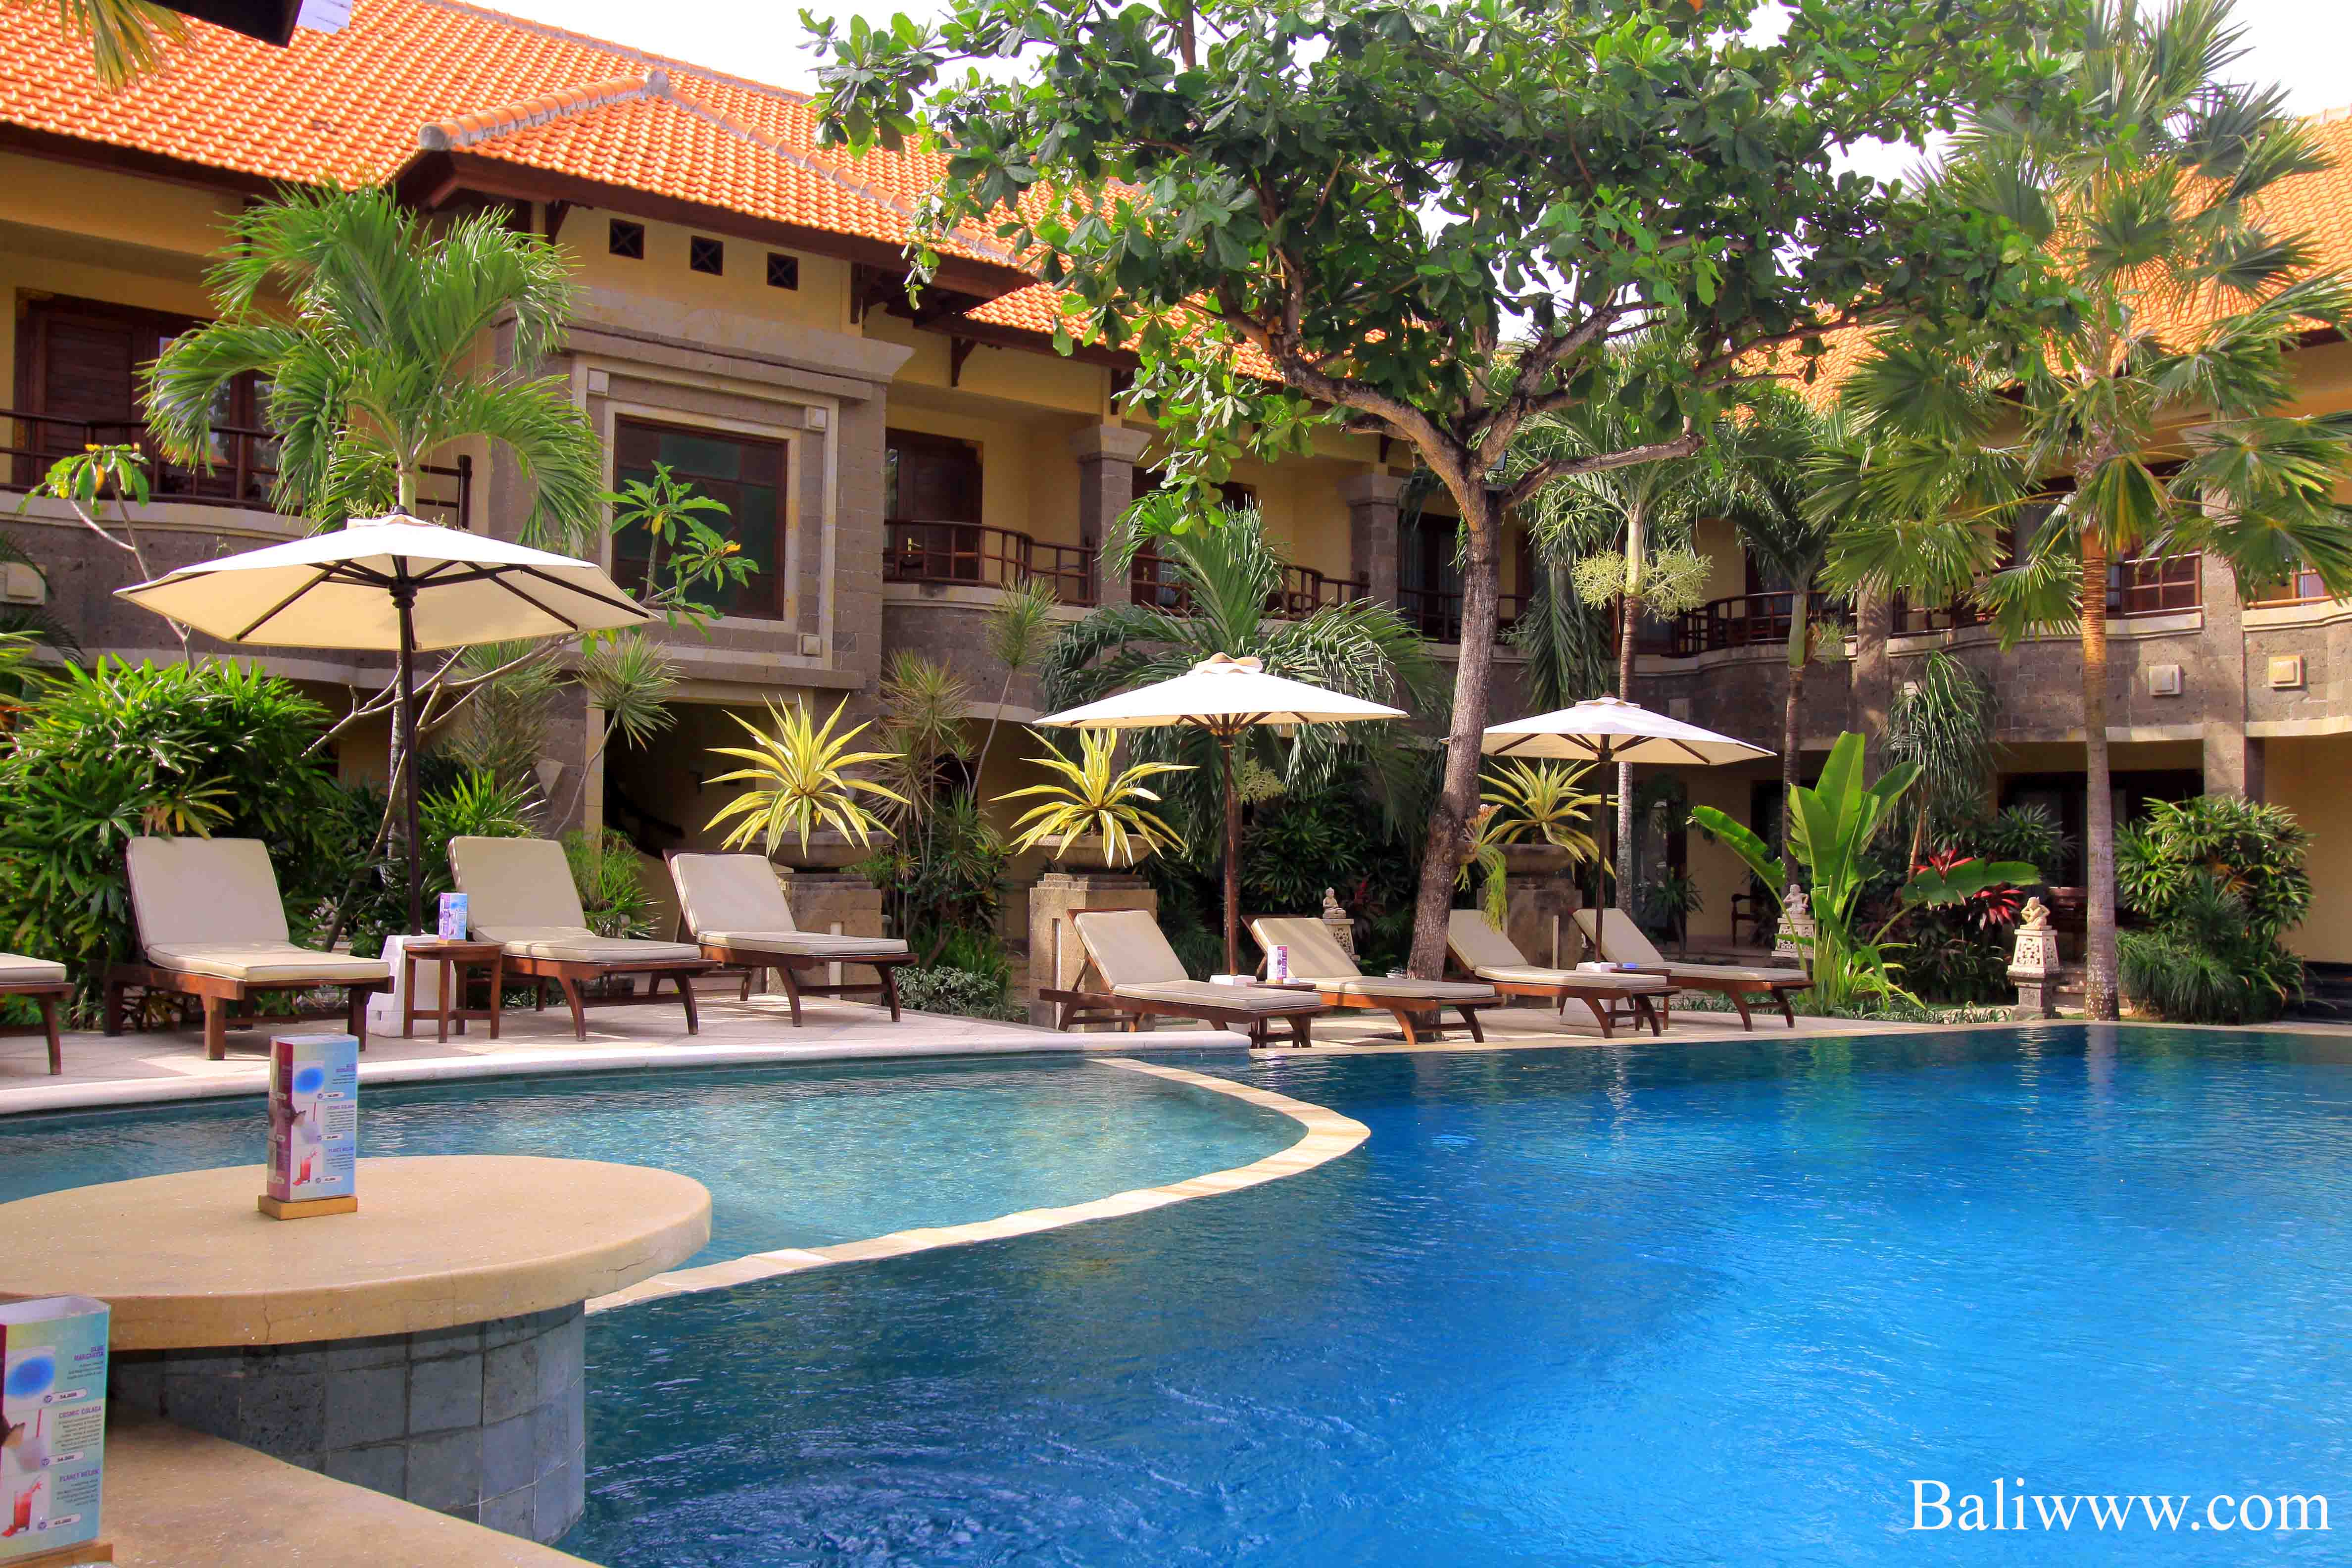 Download this Adhi Jaya Bali Hotel picture